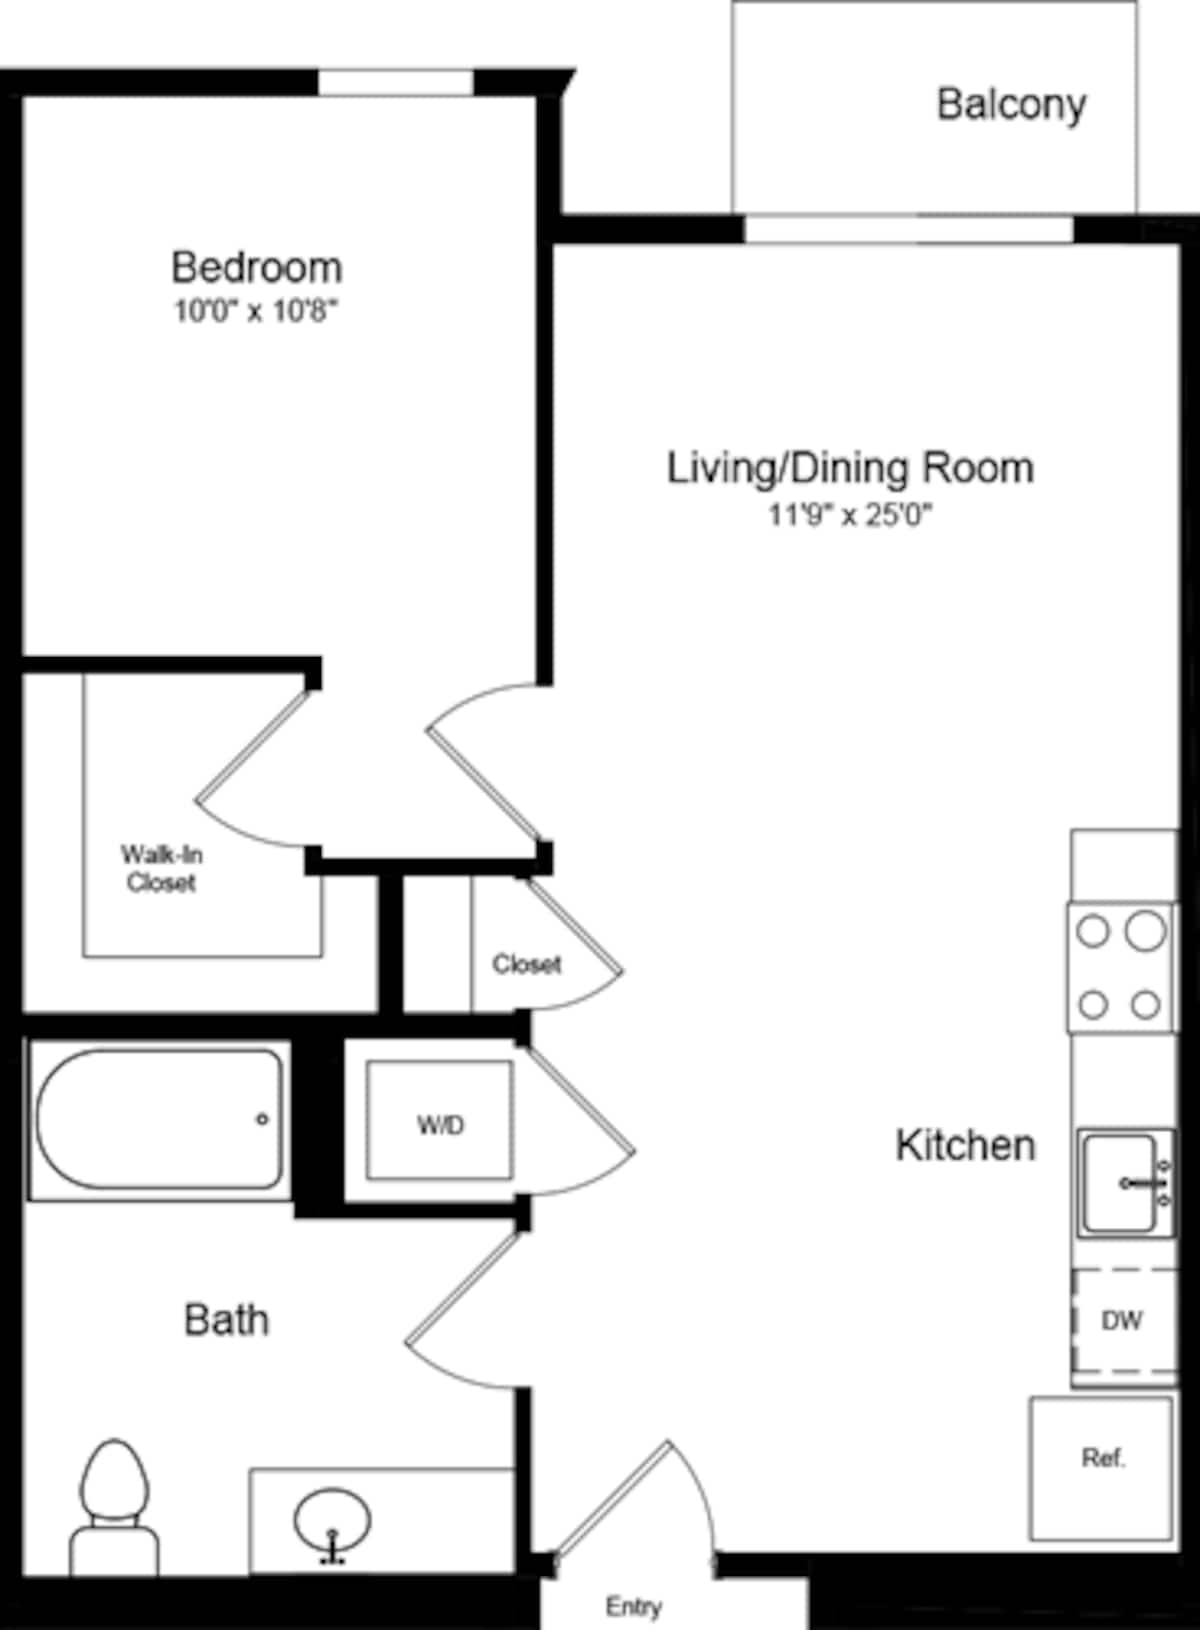 Floorplan diagram for 1 Bedroom A with Balcony, showing 1 bedroom